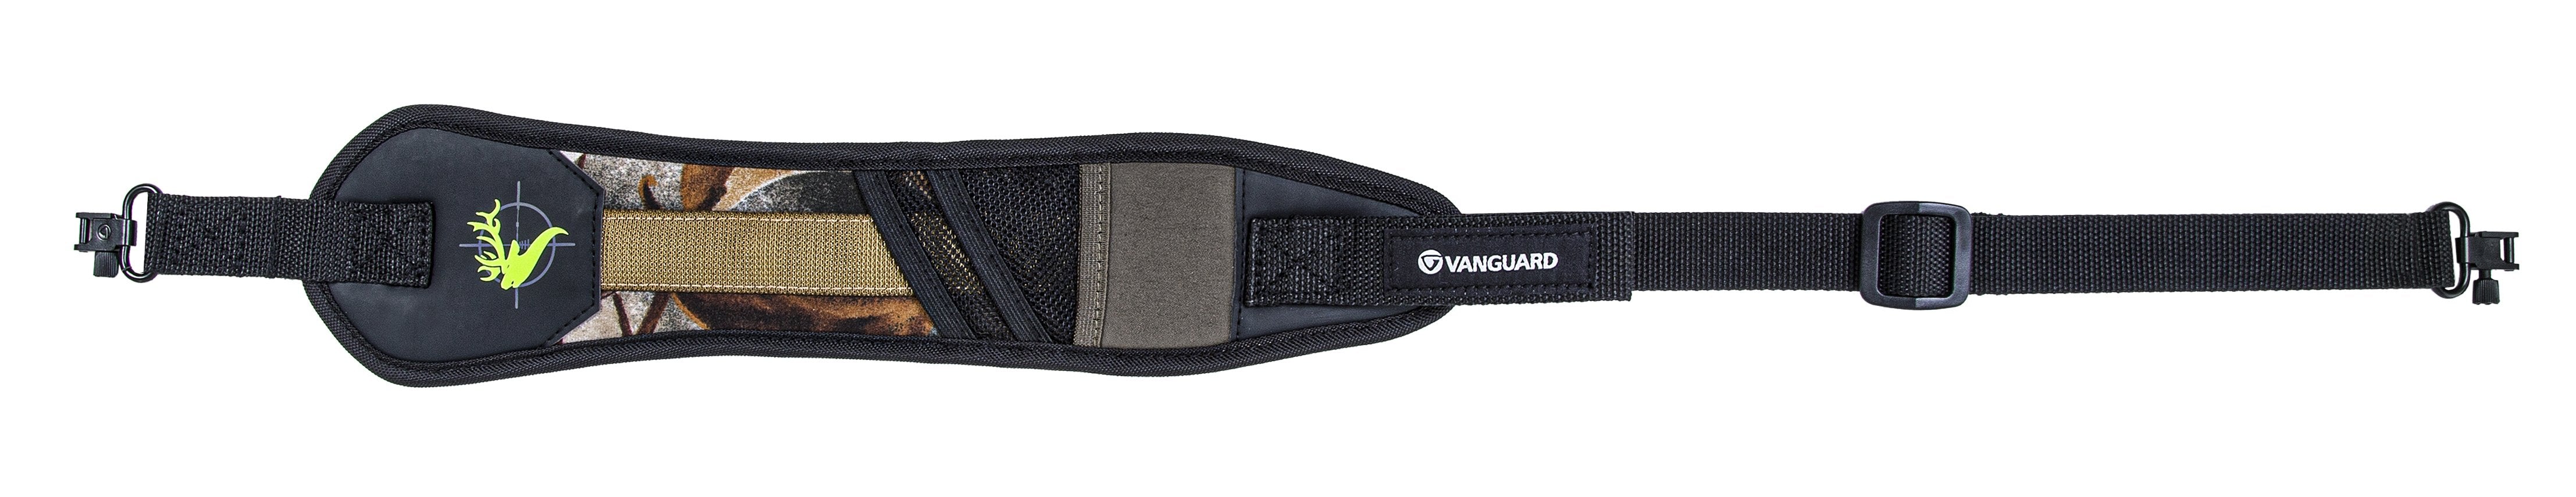 Vanguard Endeavor Sling 203C - Correa de neopreno con bolsillos, camuflaje | Tripodes